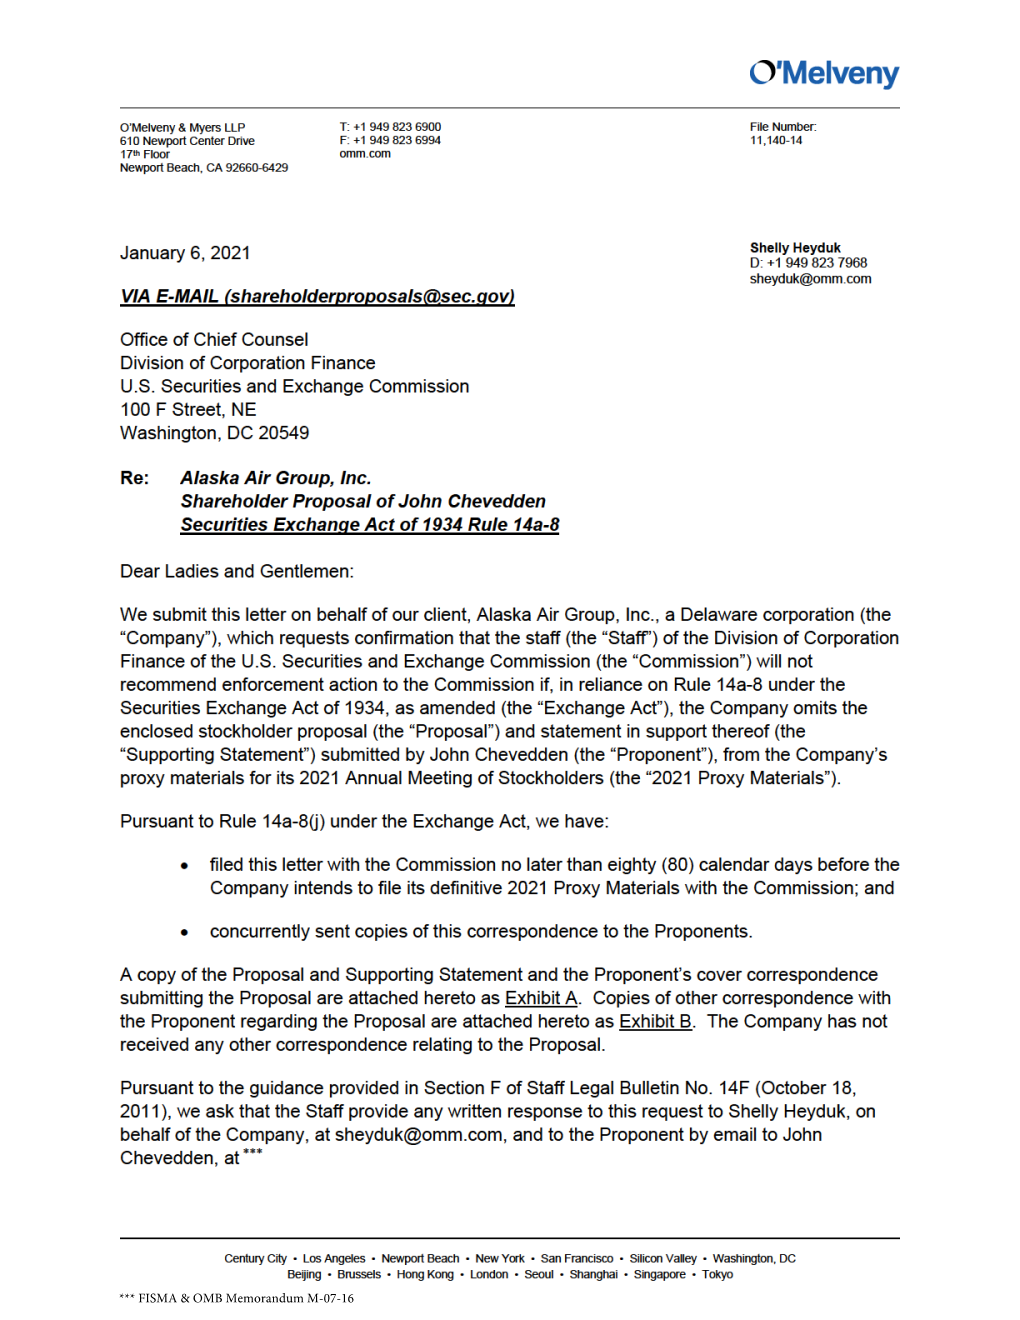 Alaska Air Group, Inc.; Rule 14A-8 No-Action Letter